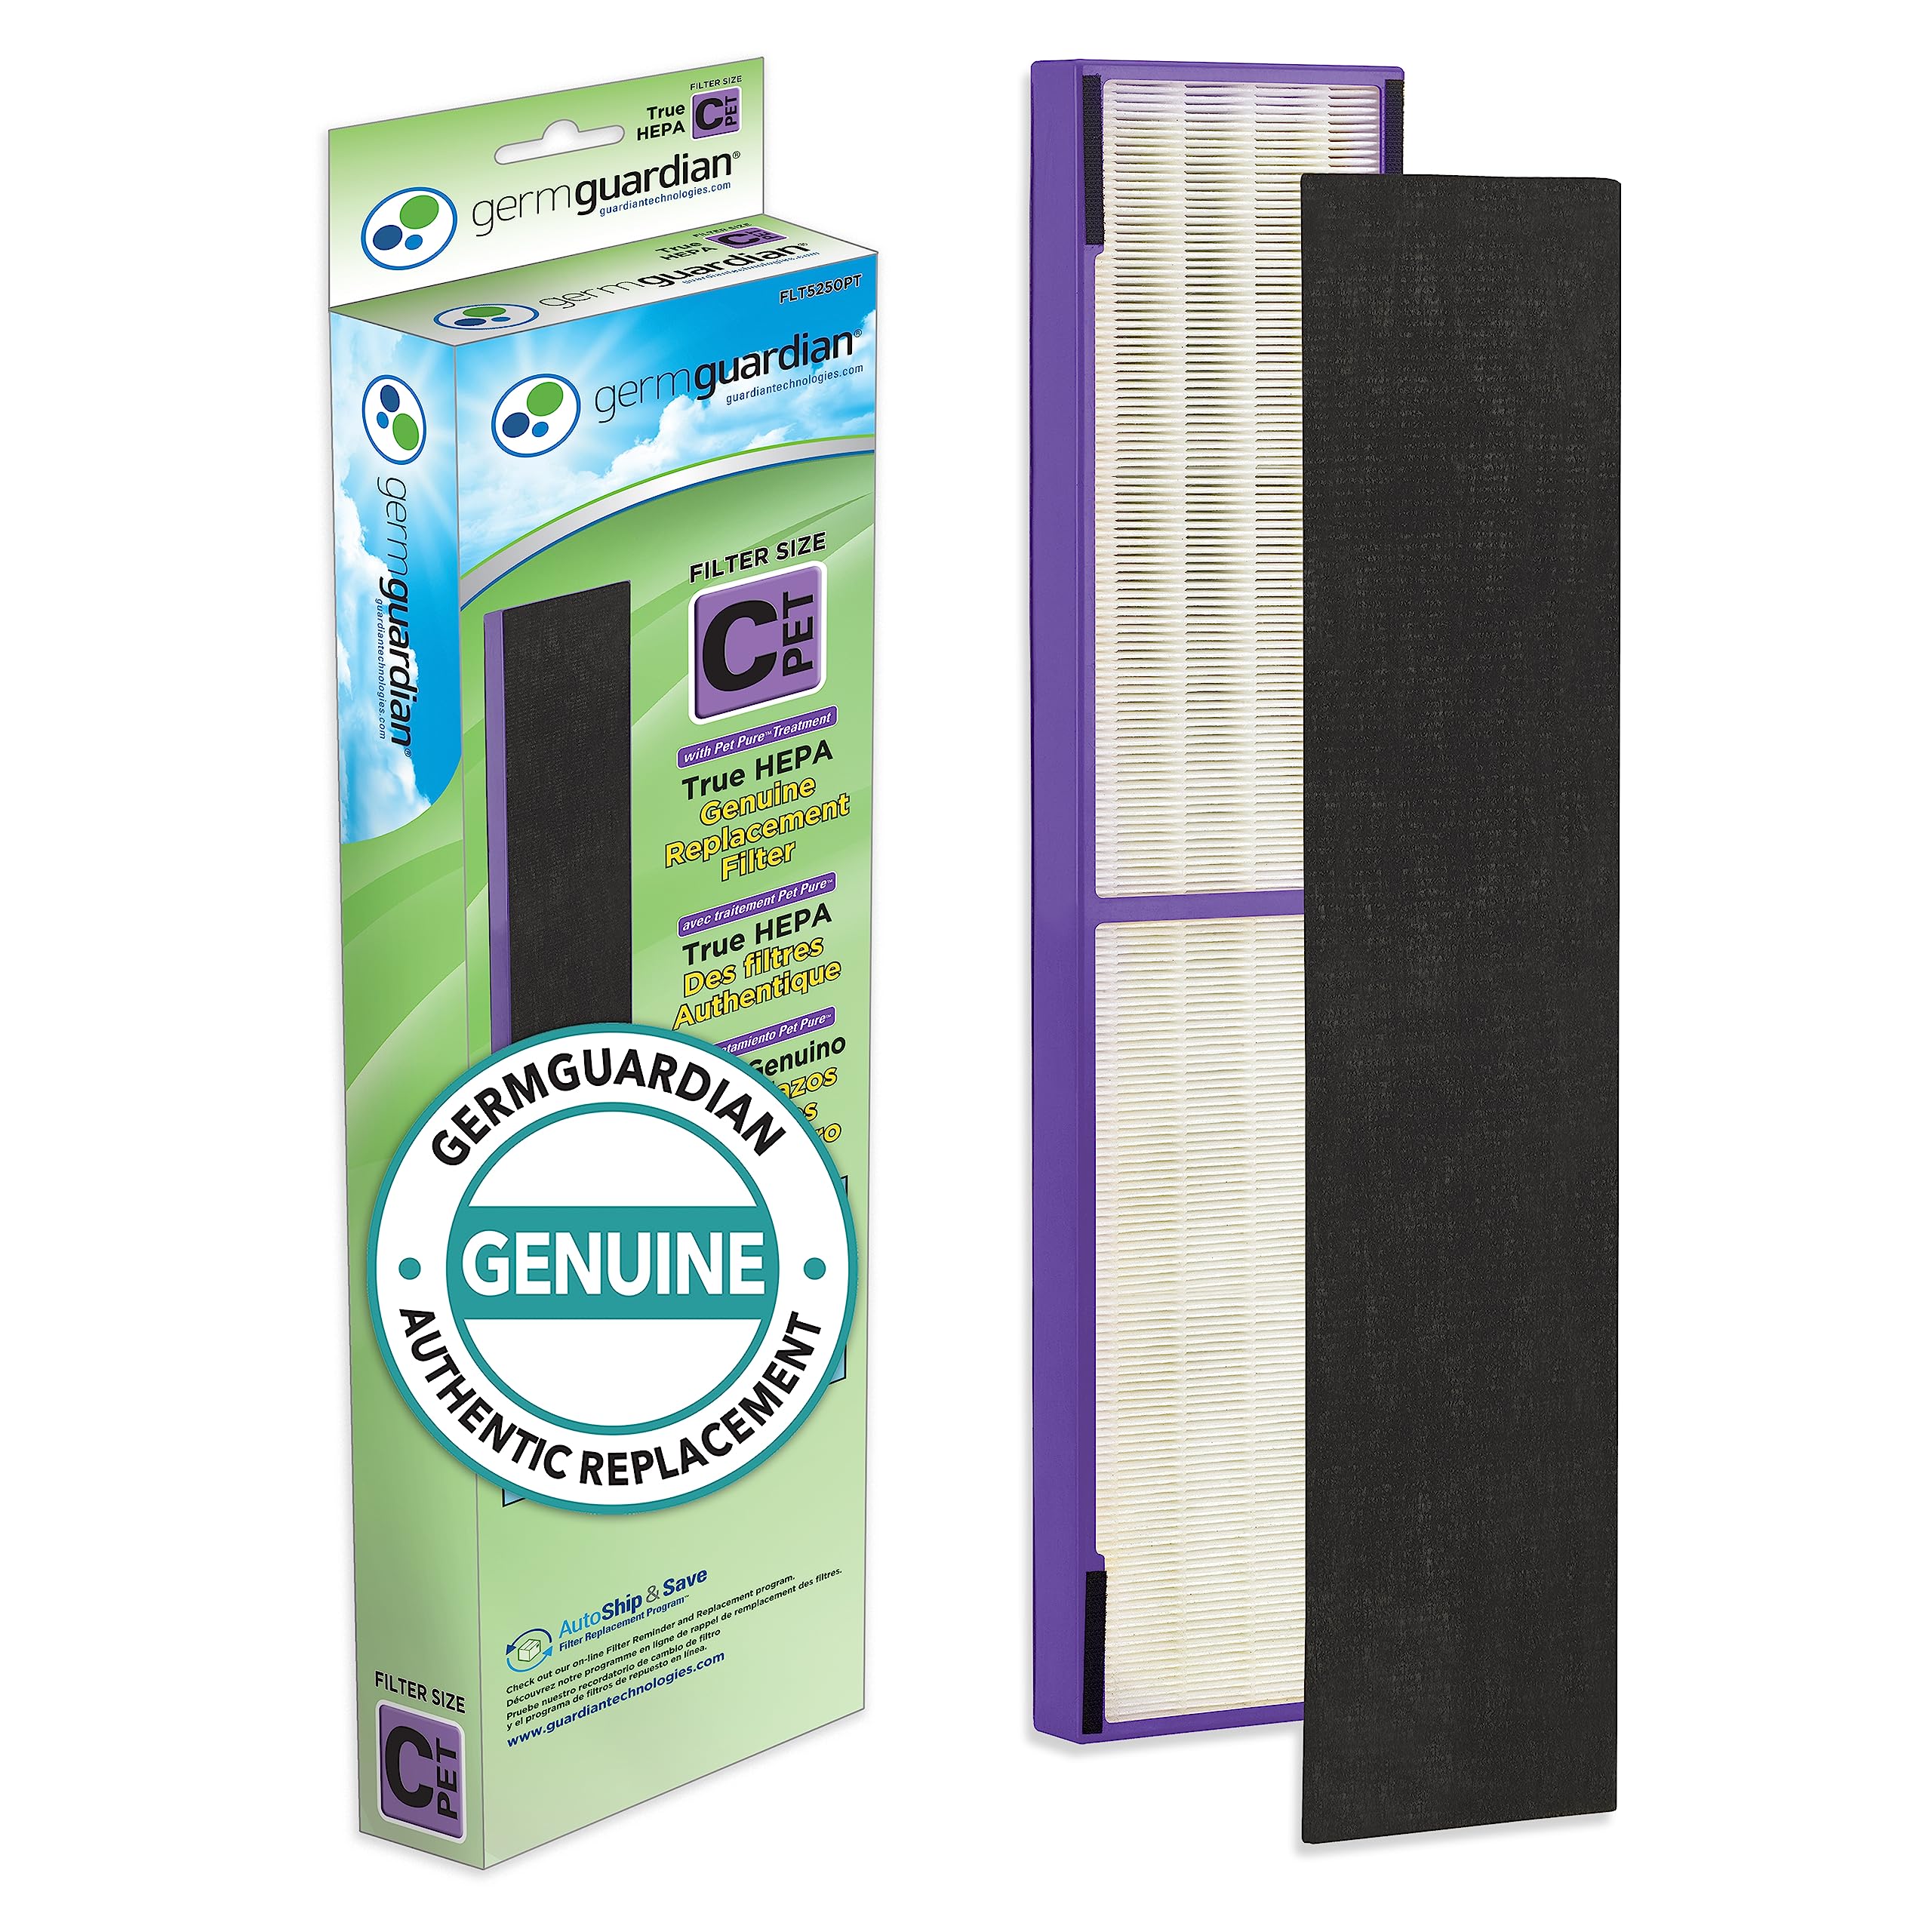 Germ Guardian Filter C Pet Pure HEPA Genuine Air Purifier Replacement Filter, Removes 99.97% of Pollutants, for AC5000, AC5250, AC5300, AC5350, CDAP5500, AP2800, Black/Purple, FLT5250PT